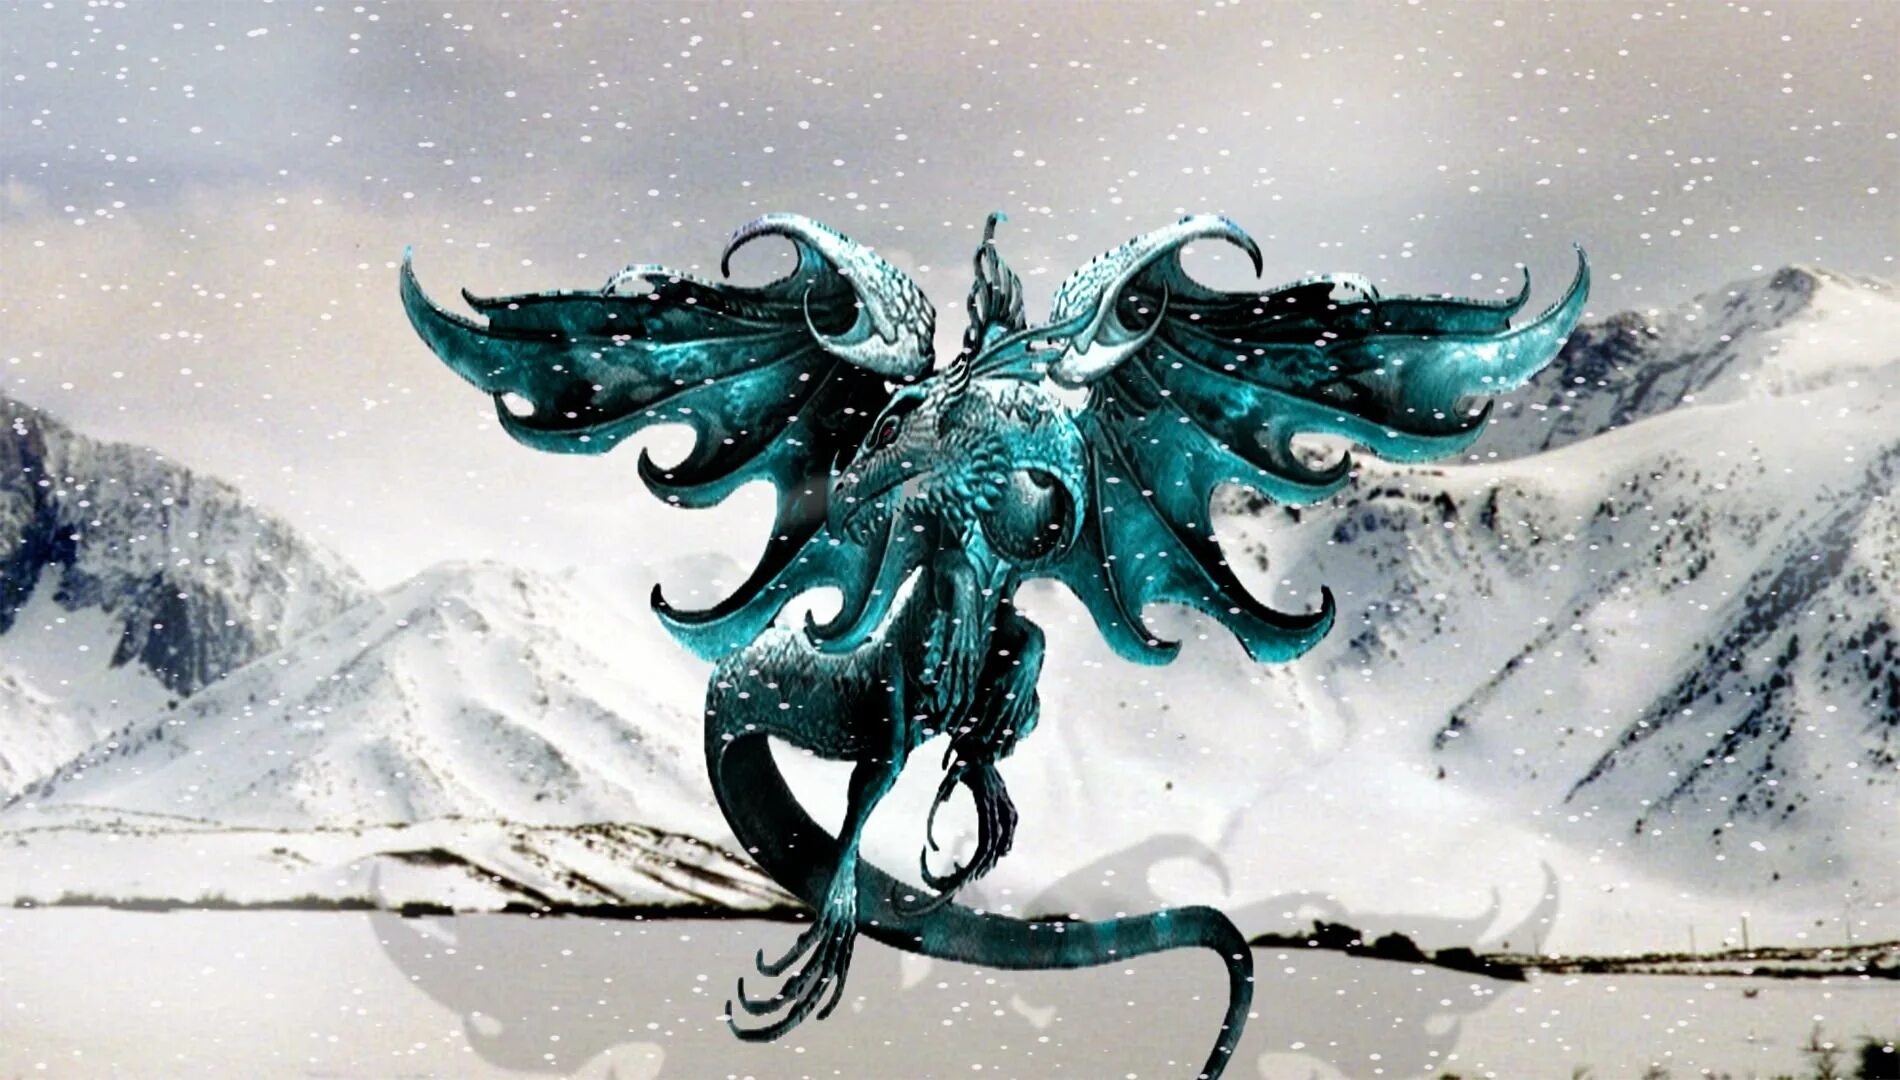 Арт Фрост драгон. Фрост дракон Фрост. Медиум–ледяной дракон. Ледяной Фрост дракон. Голова дракона на снегу